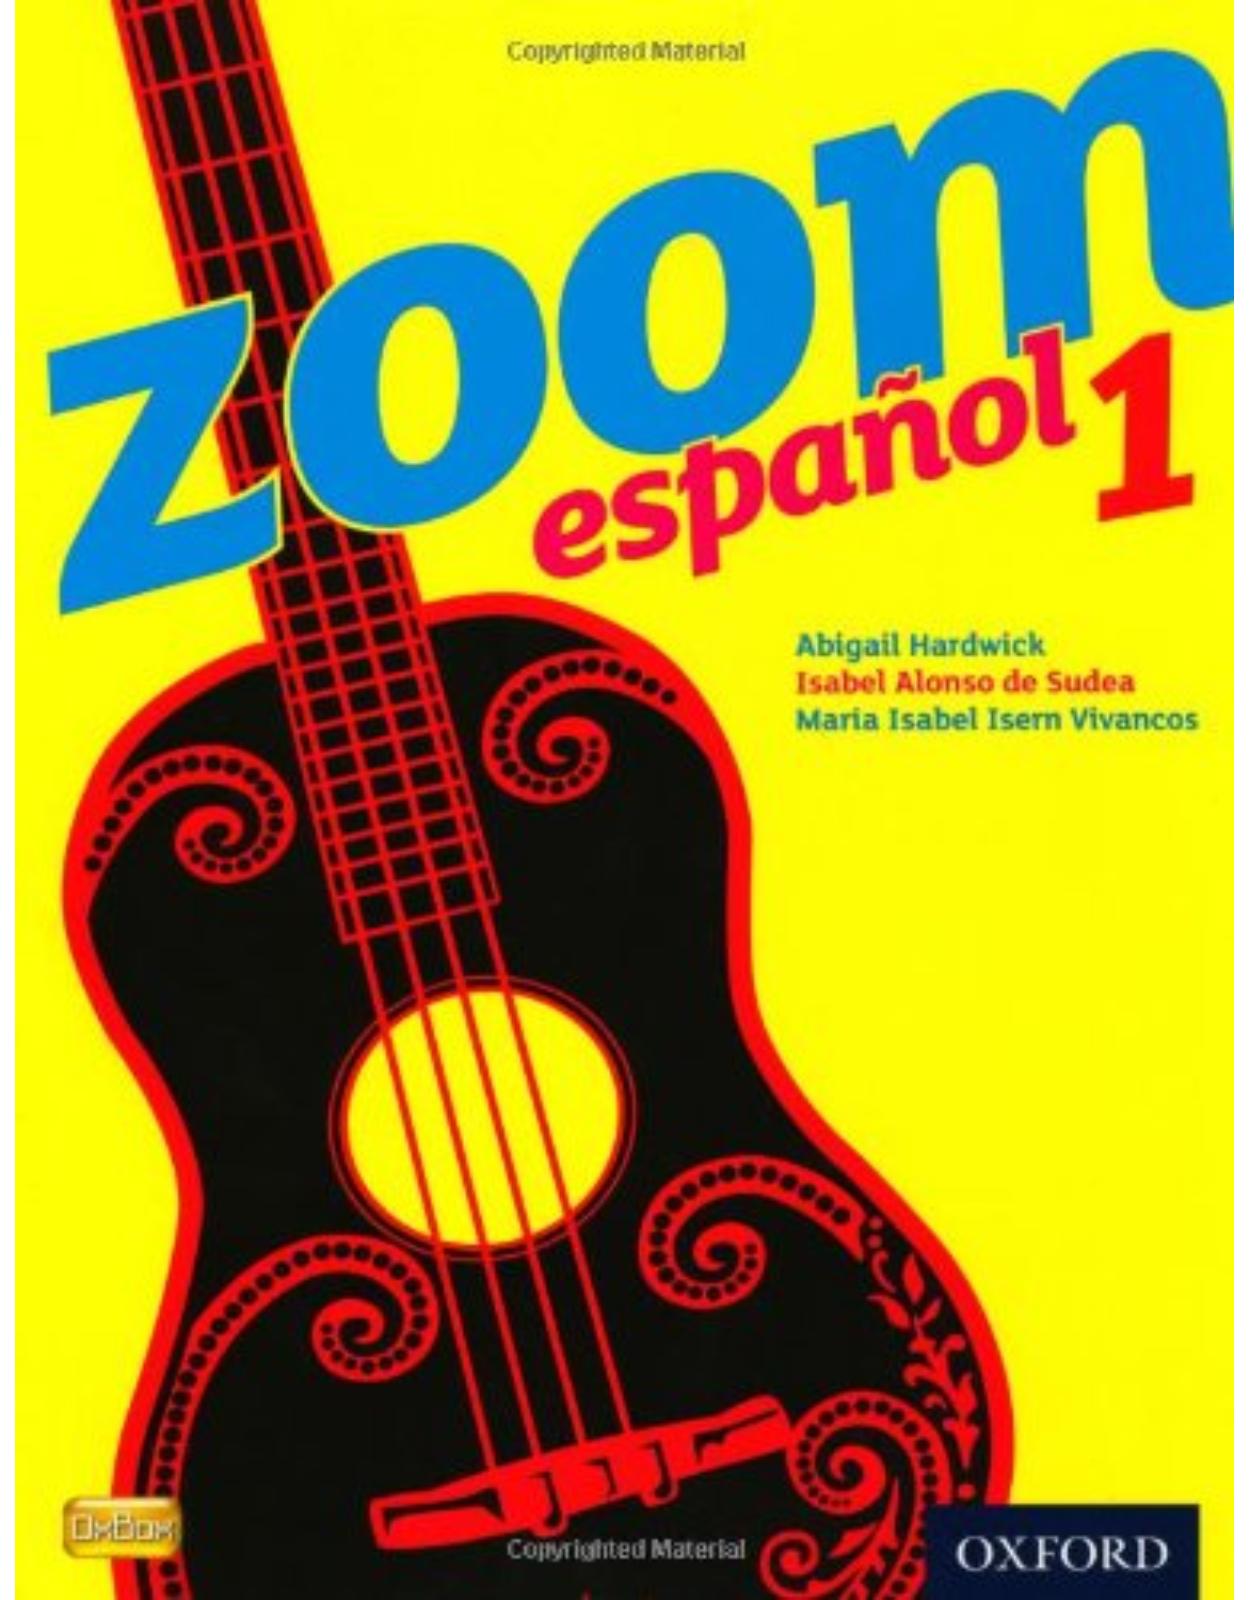 Zoom español 1 Student Book